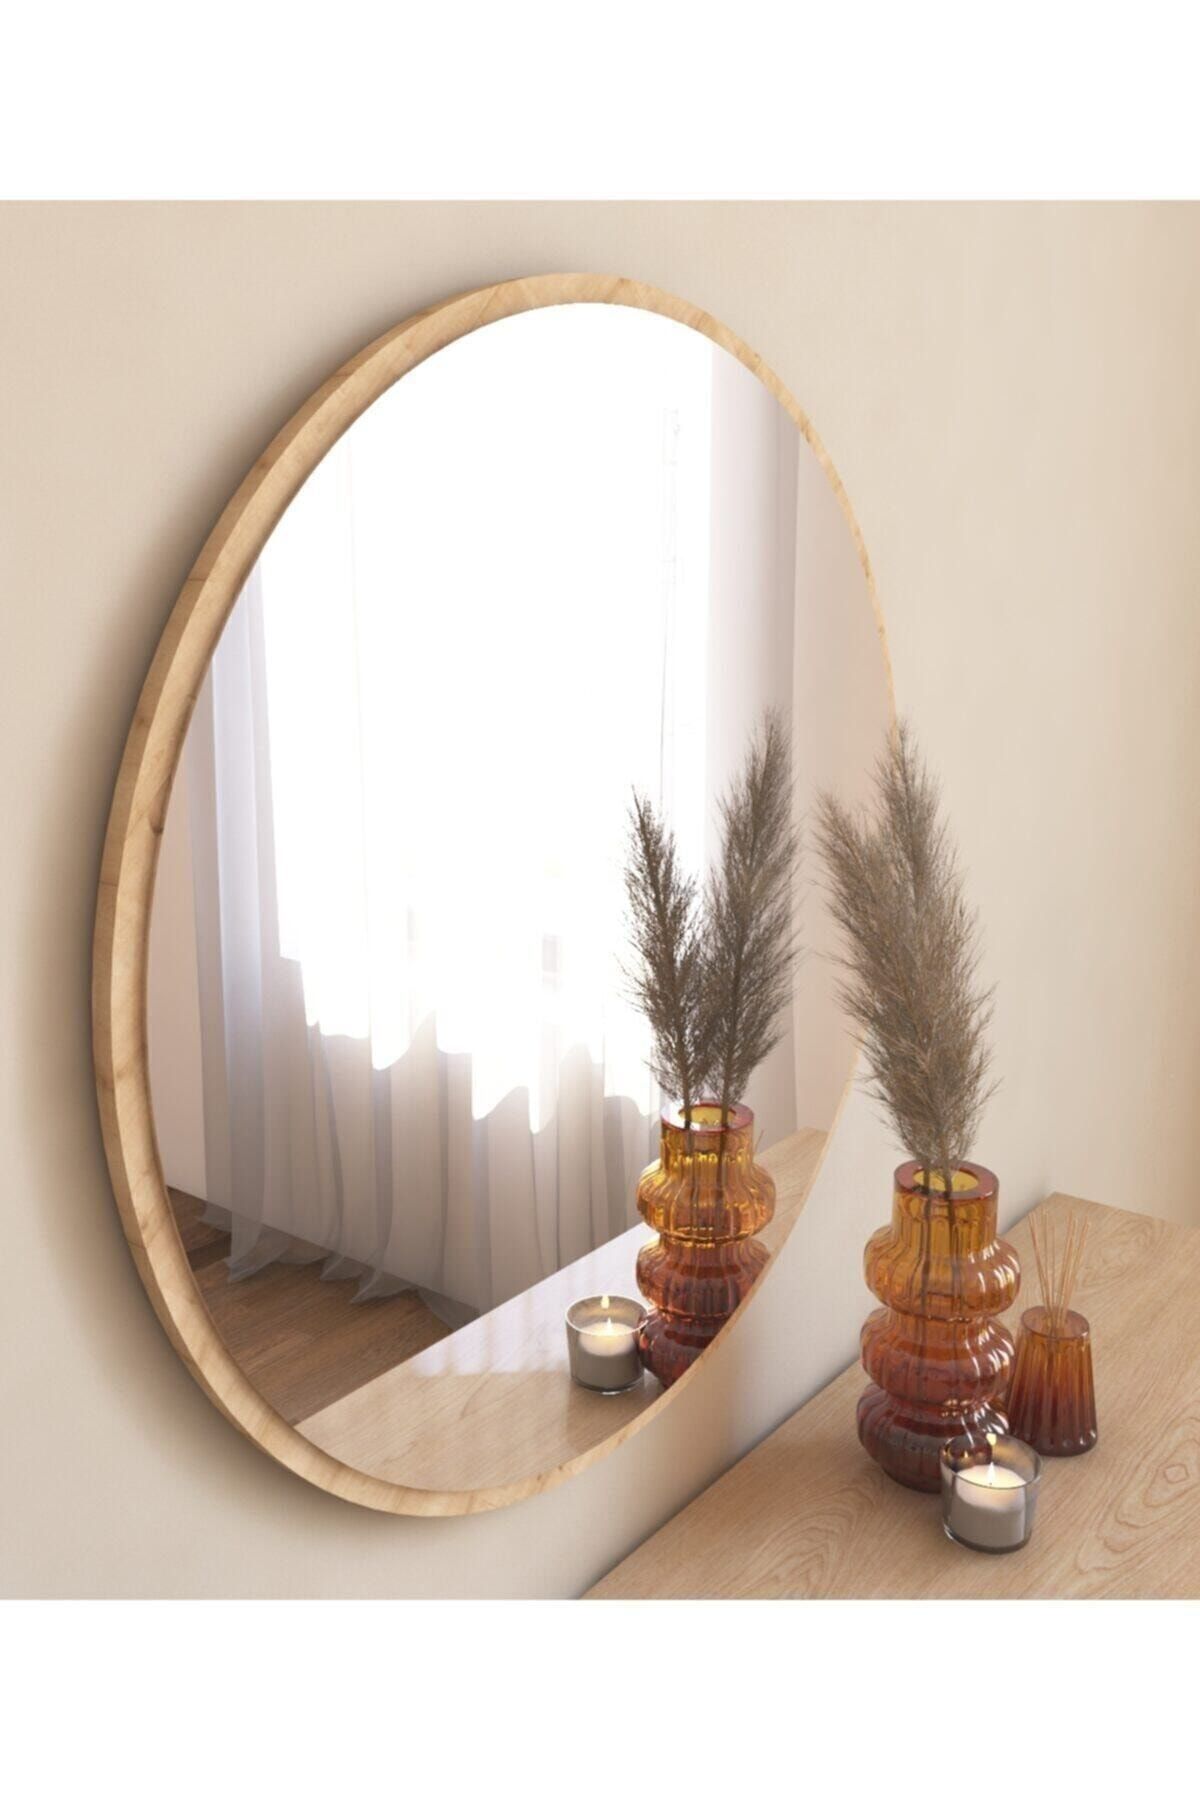 nysamo 45 cm Safir Meşe Dekoratif Yuvarlak Antre Hol Koridor Salon Banyo Wc Ofis Aynası